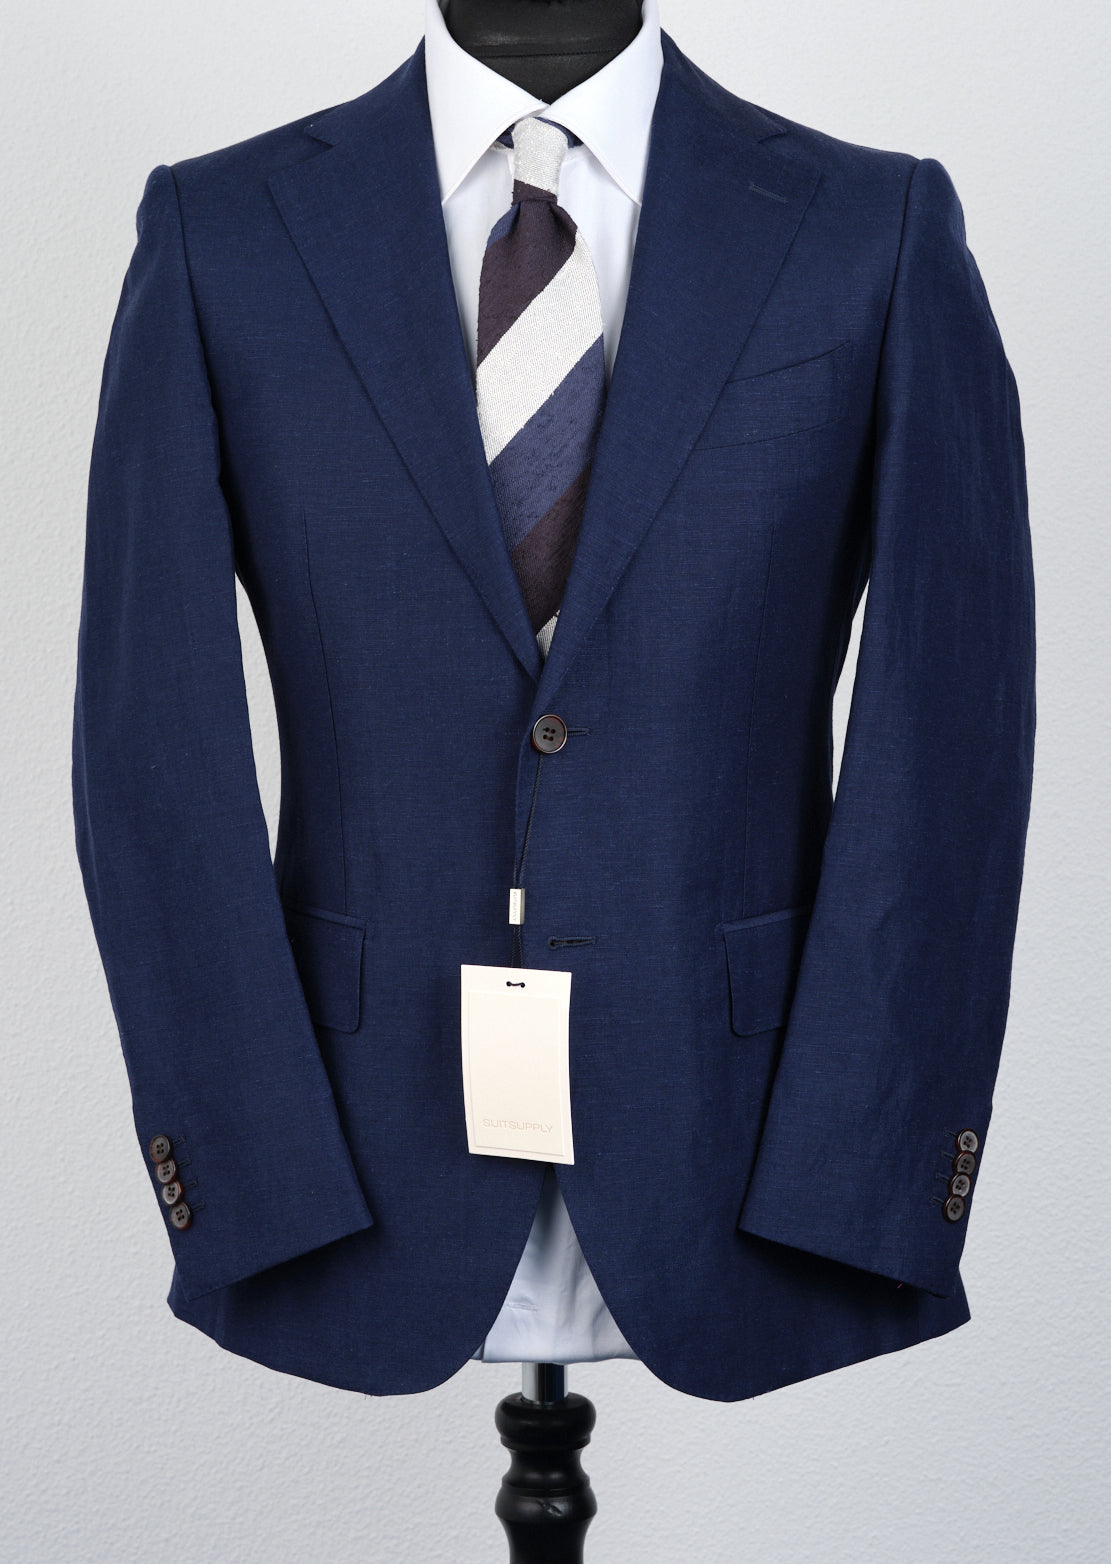 New Suitsupply Lazio Navy Blue Half Wool Half Linen Suit - Size 42R